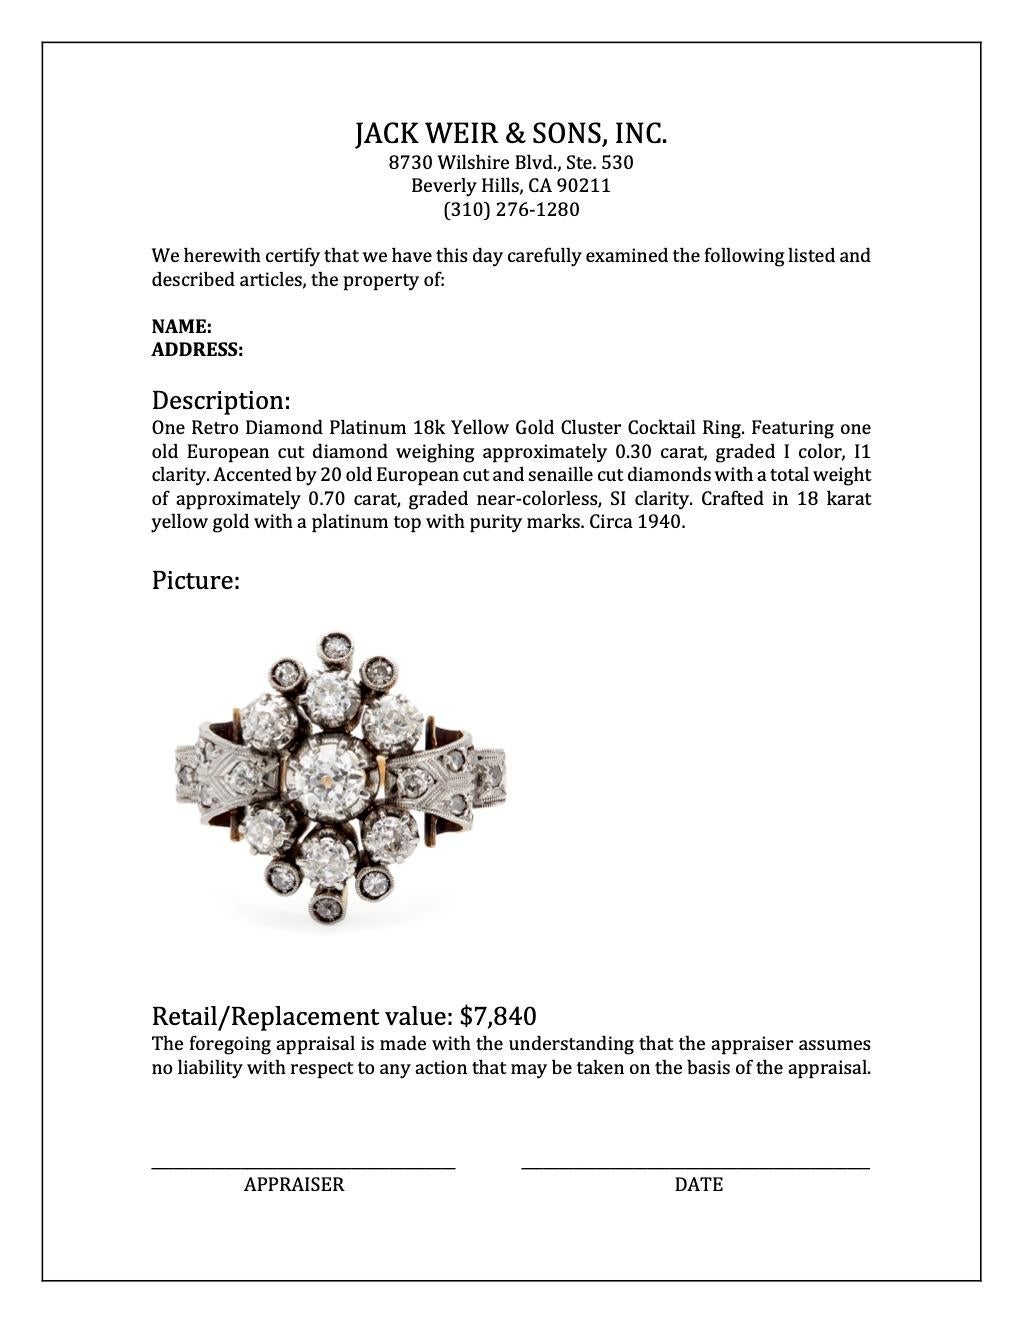 Women's or Men's Retro Diamond Platinum 18k Yellow Gold Cluster Cocktail Ring For Sale